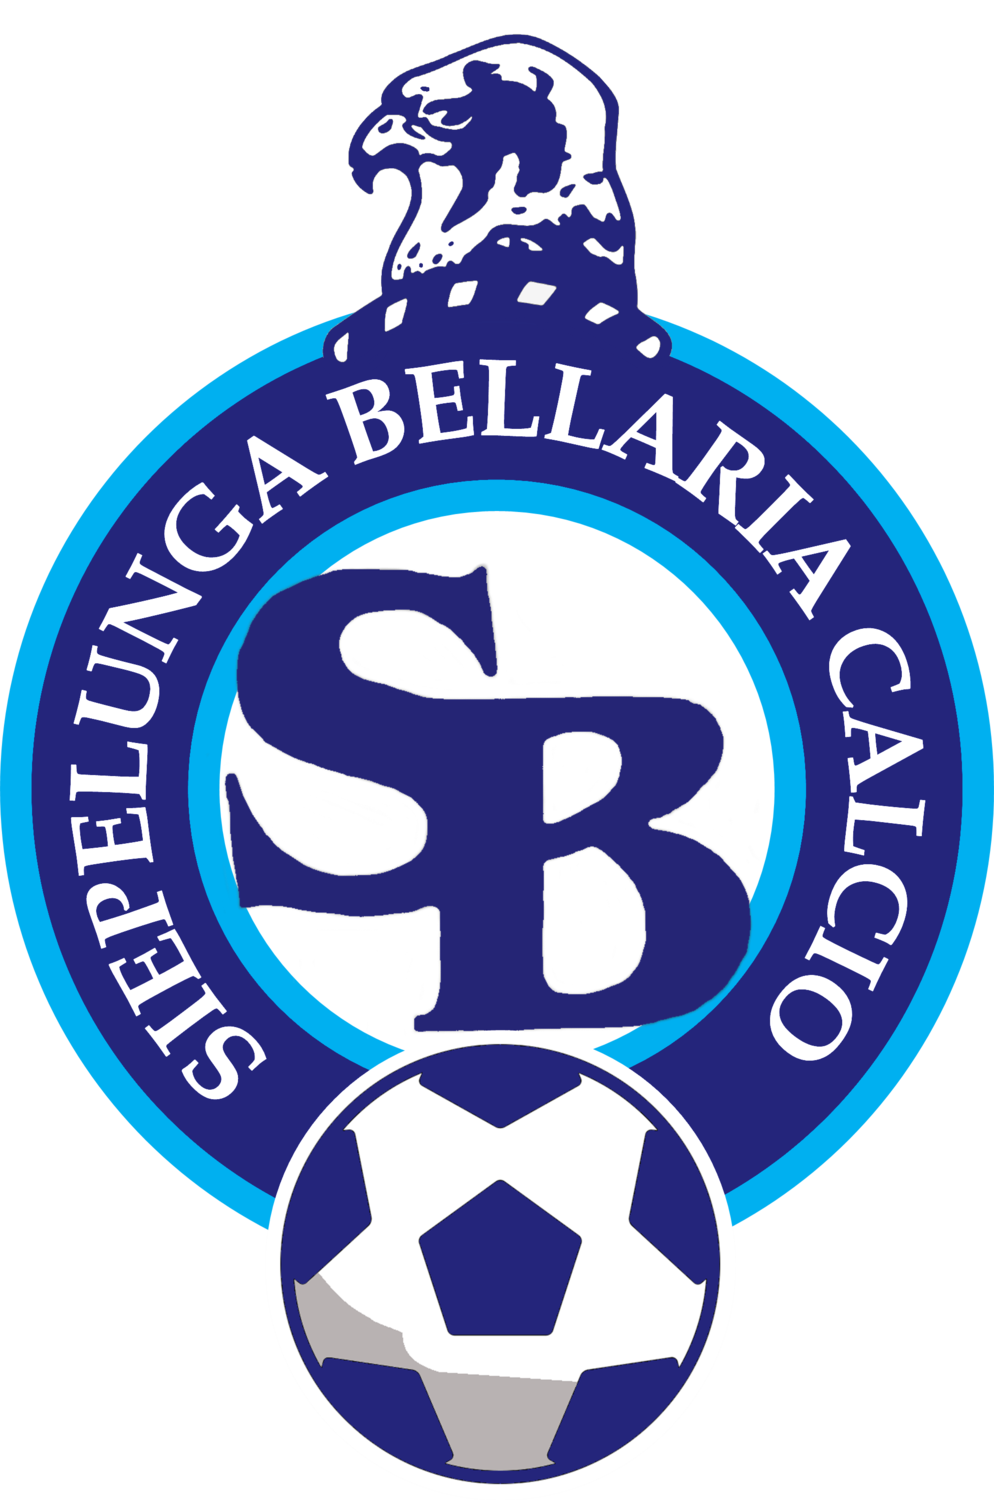 Wappen ASD Siepelunga Bellaria Calcio  99937